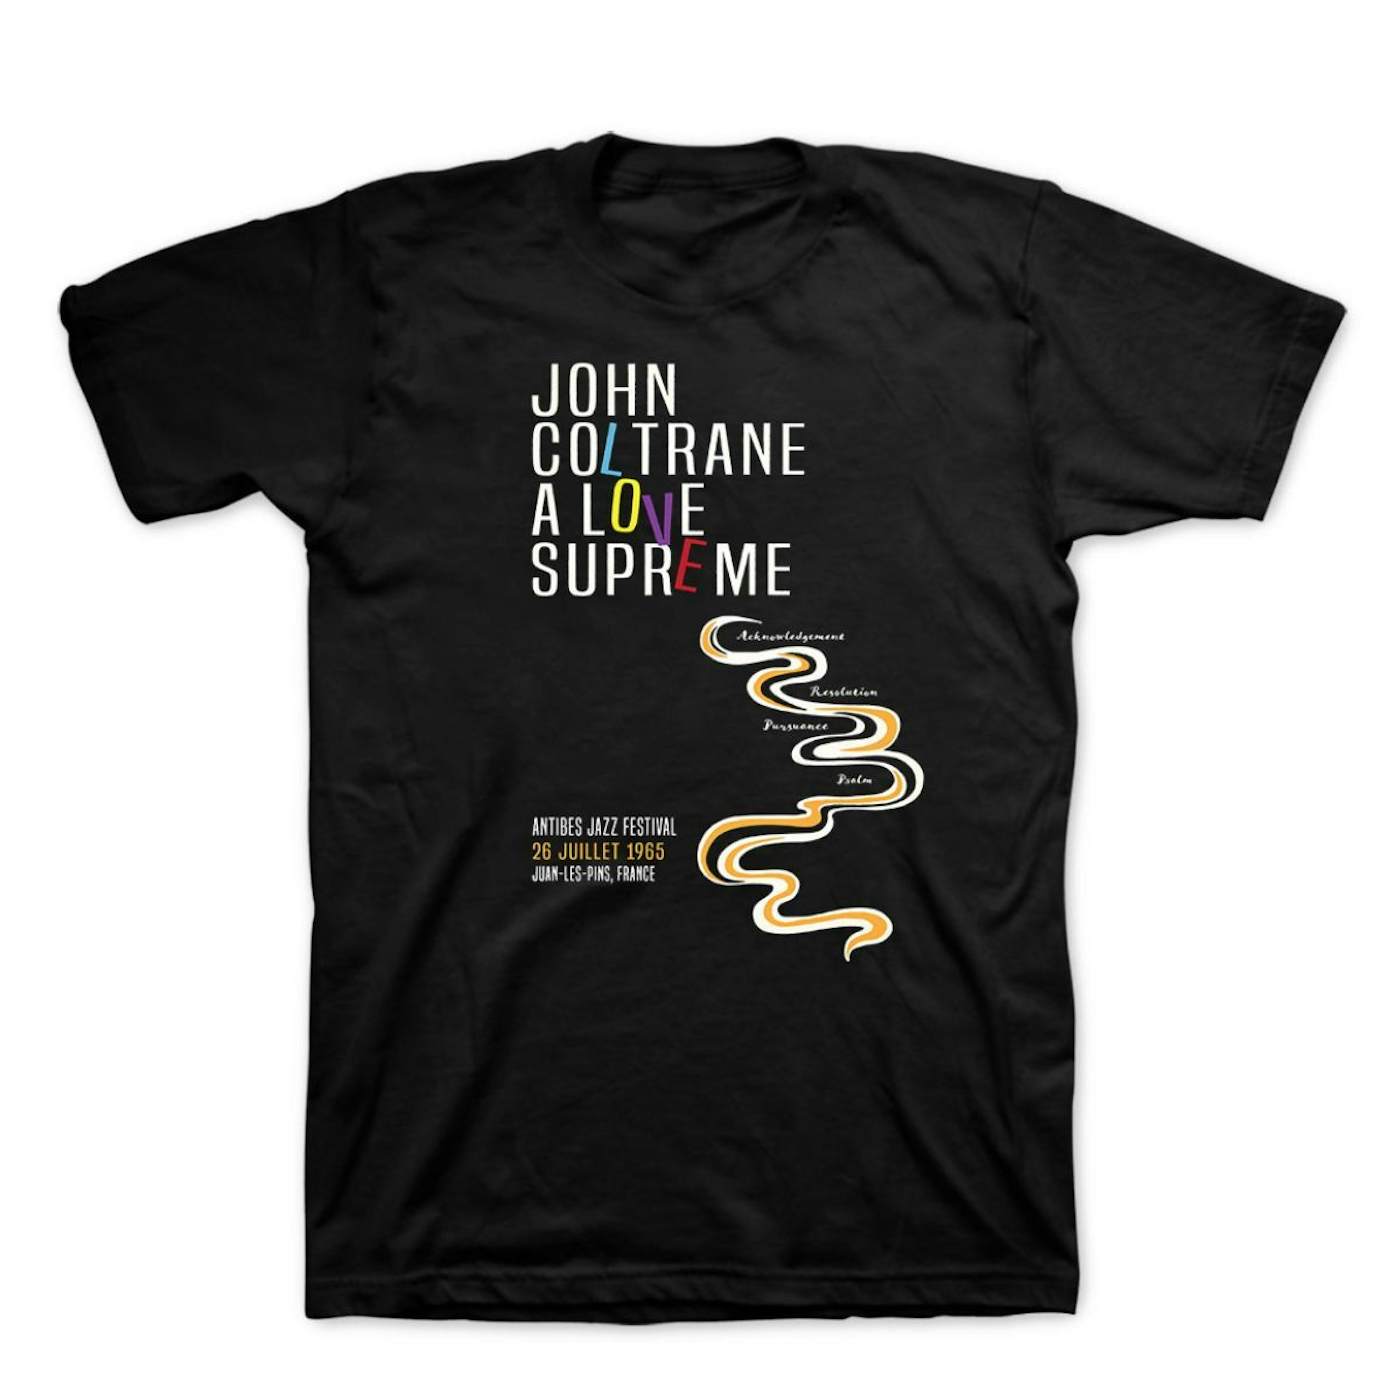 John Coltrane A Love Supreme at Antibes Jazz Festival T-shirt